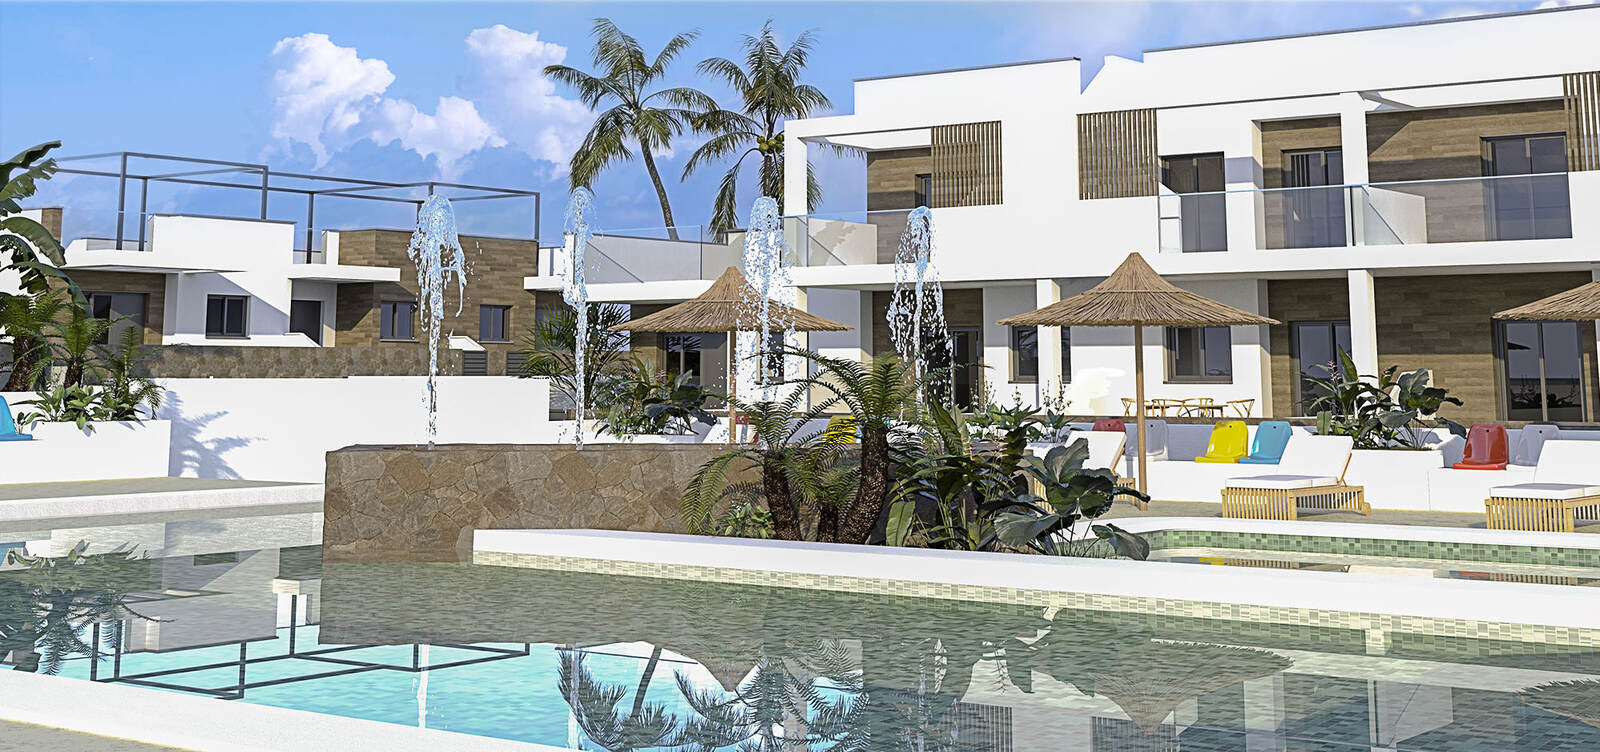 Kup dom z basenem w Hiszpanii, Real estate